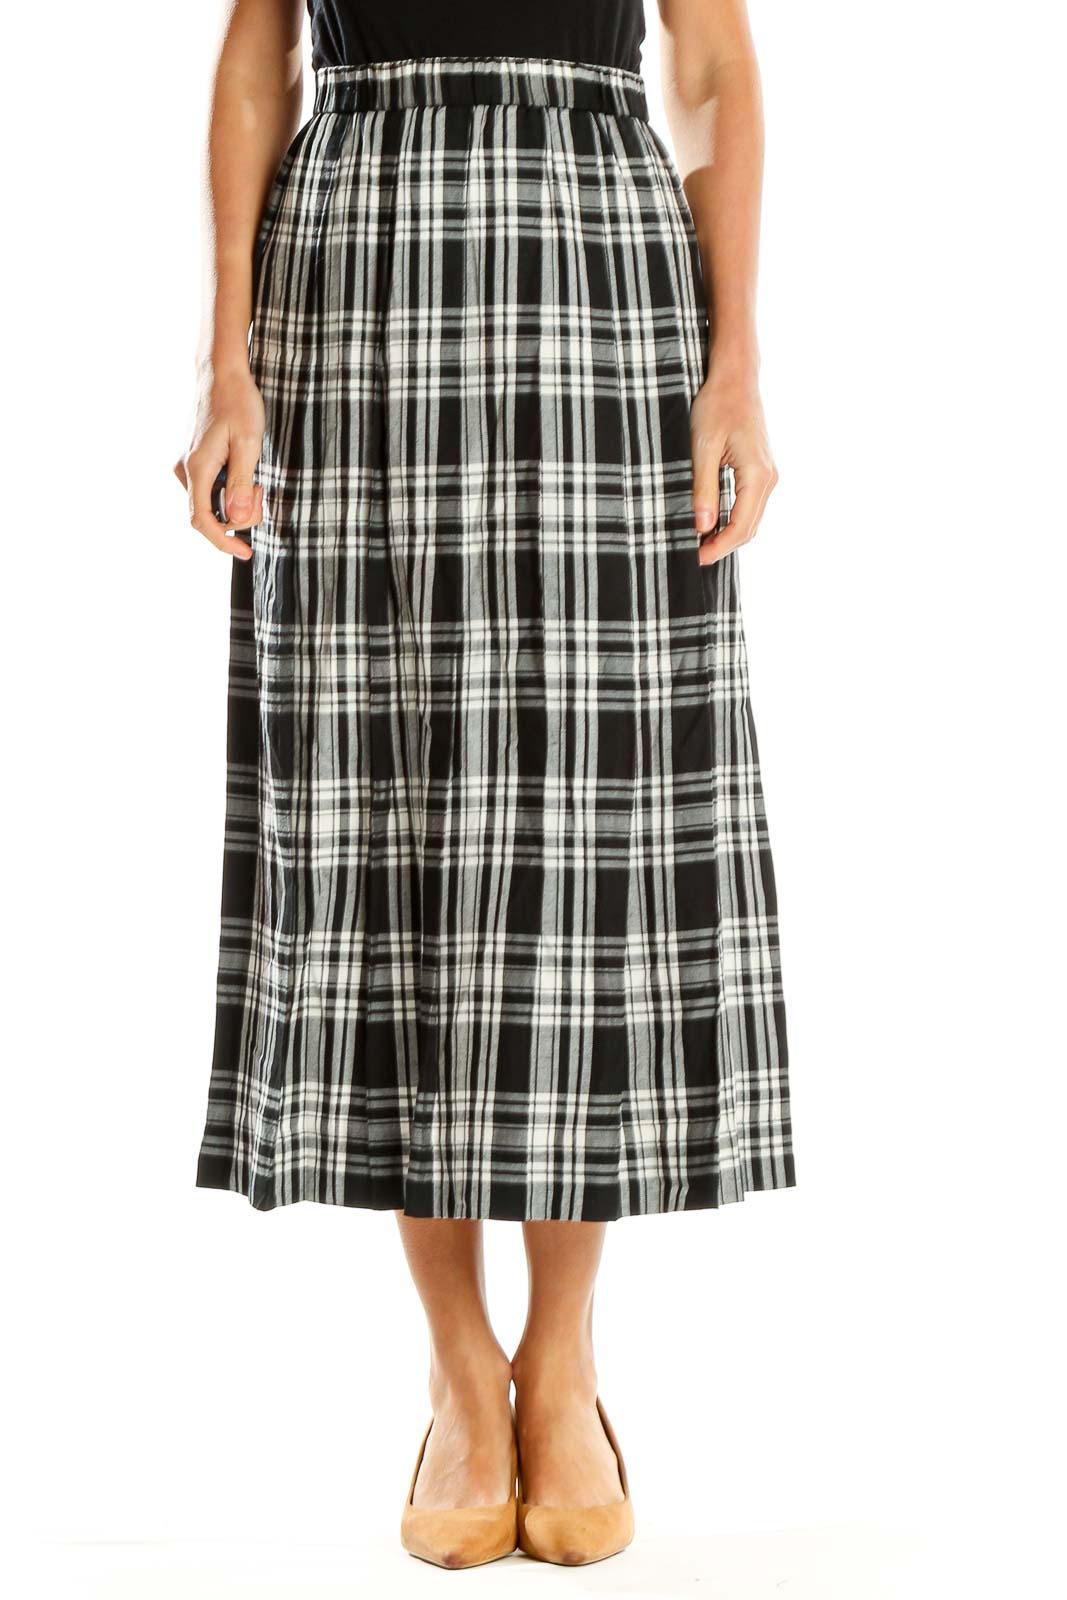 Black White Checkered A-Line Skirt Front